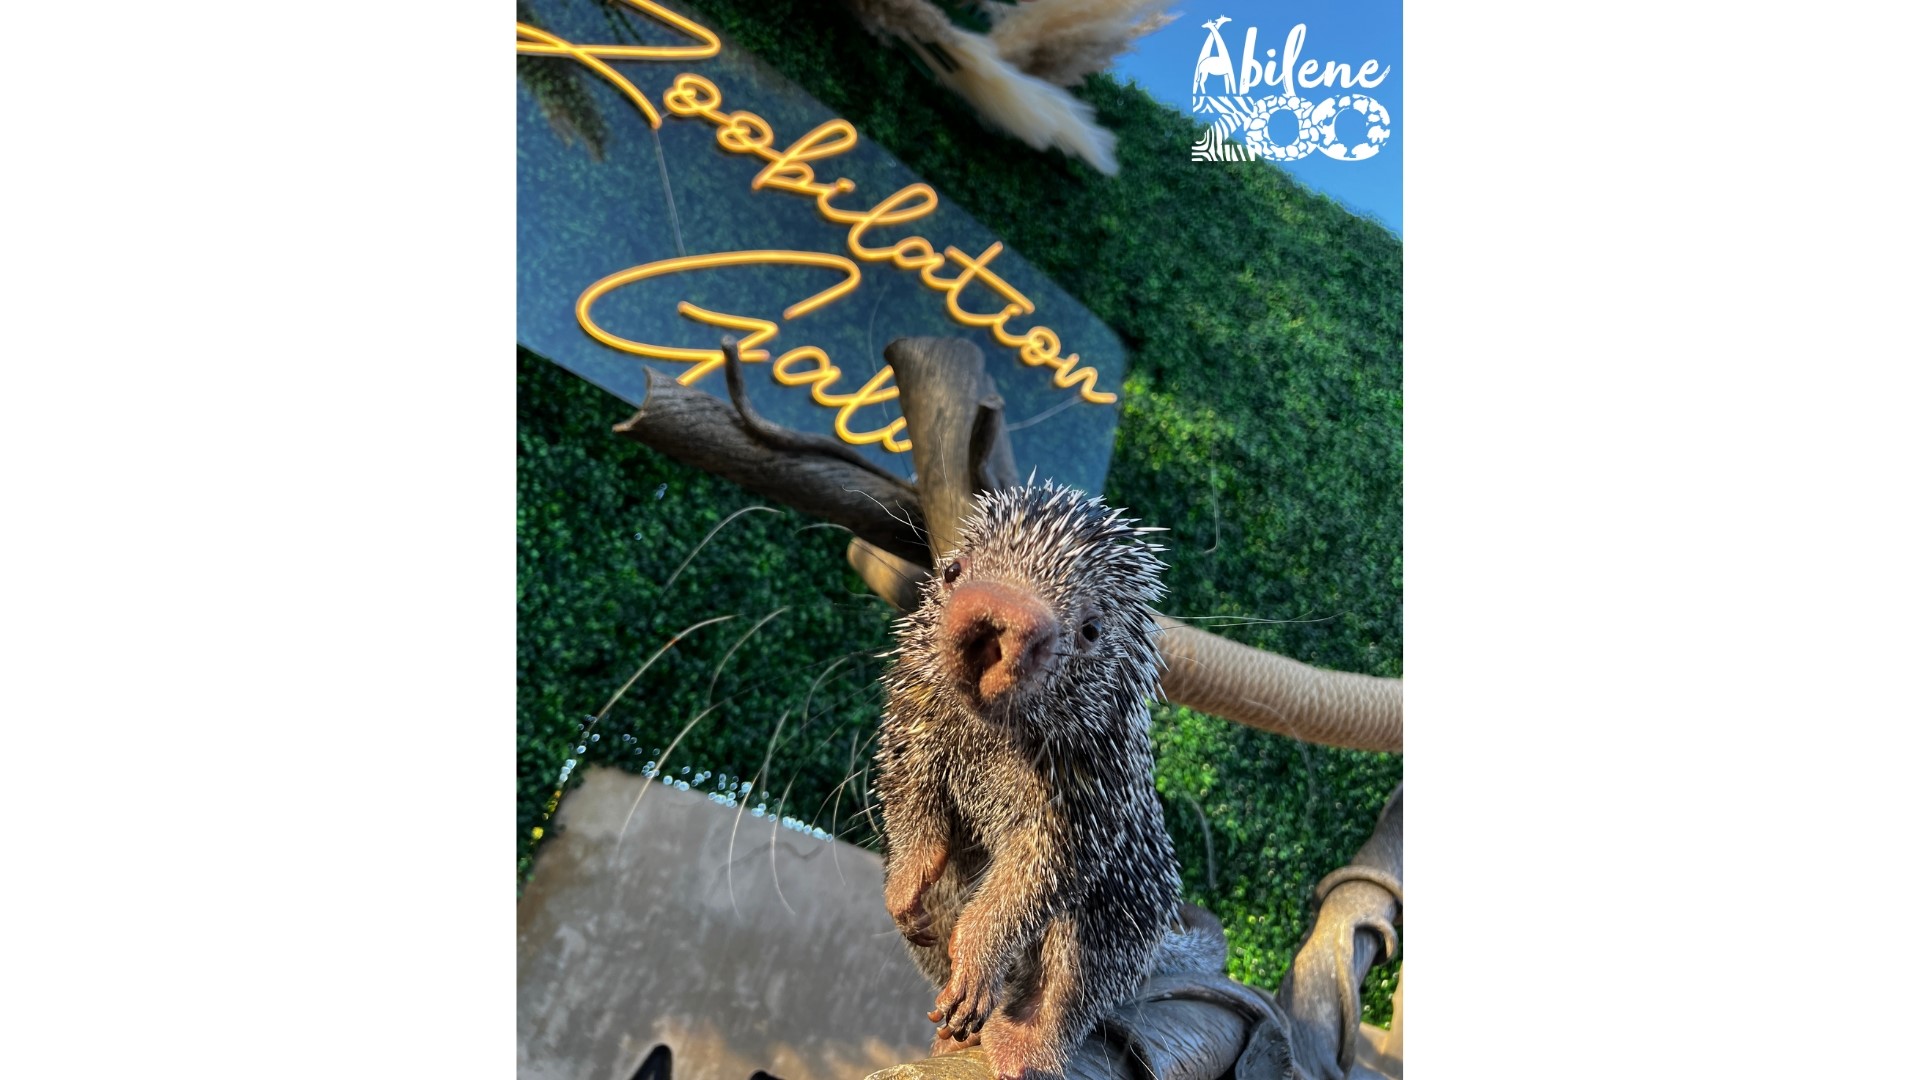 Abilene Zoo home to Zoobilation gala in April